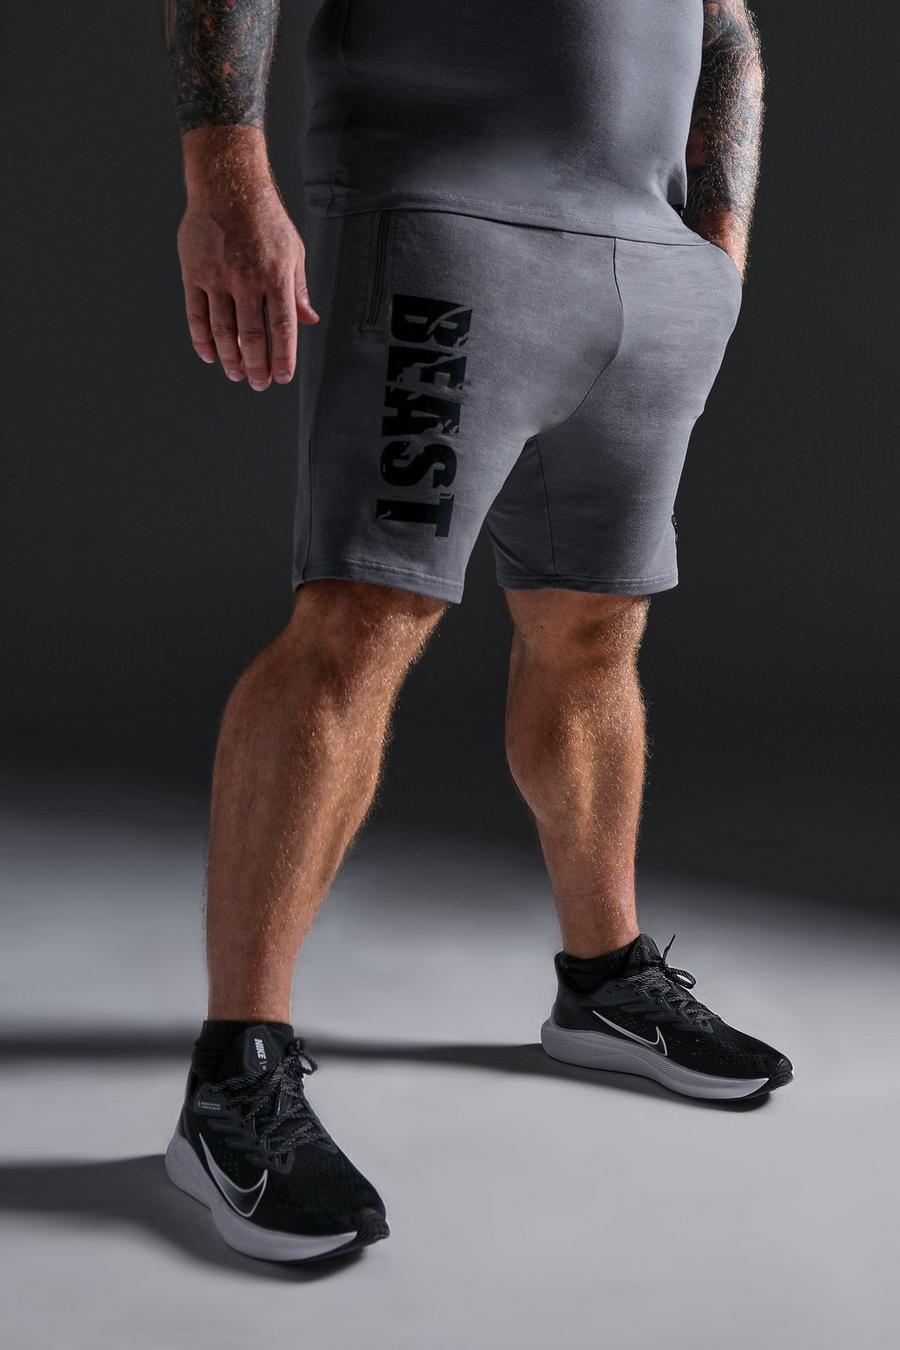 Pantalón corto deportivo MAN Active x Beast - Eddie Hall, Charcoal gris image number 1